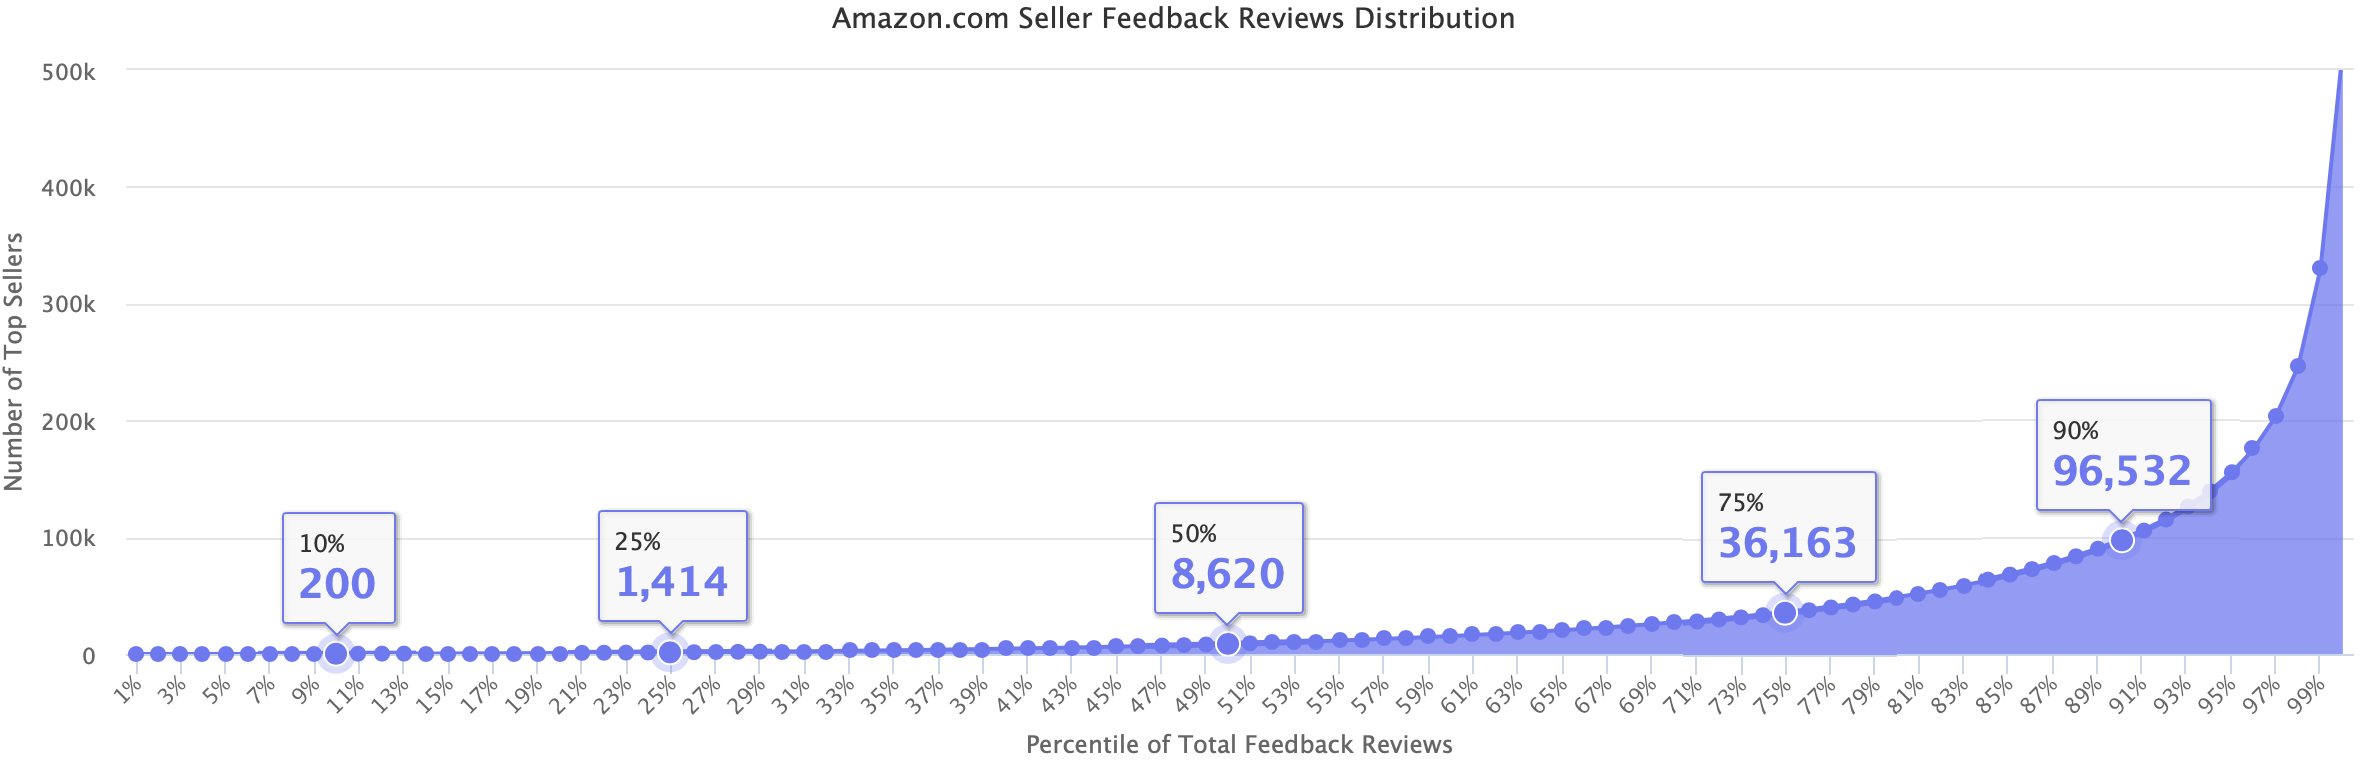 Amazon.com Seller Feedback Reviews Distribution